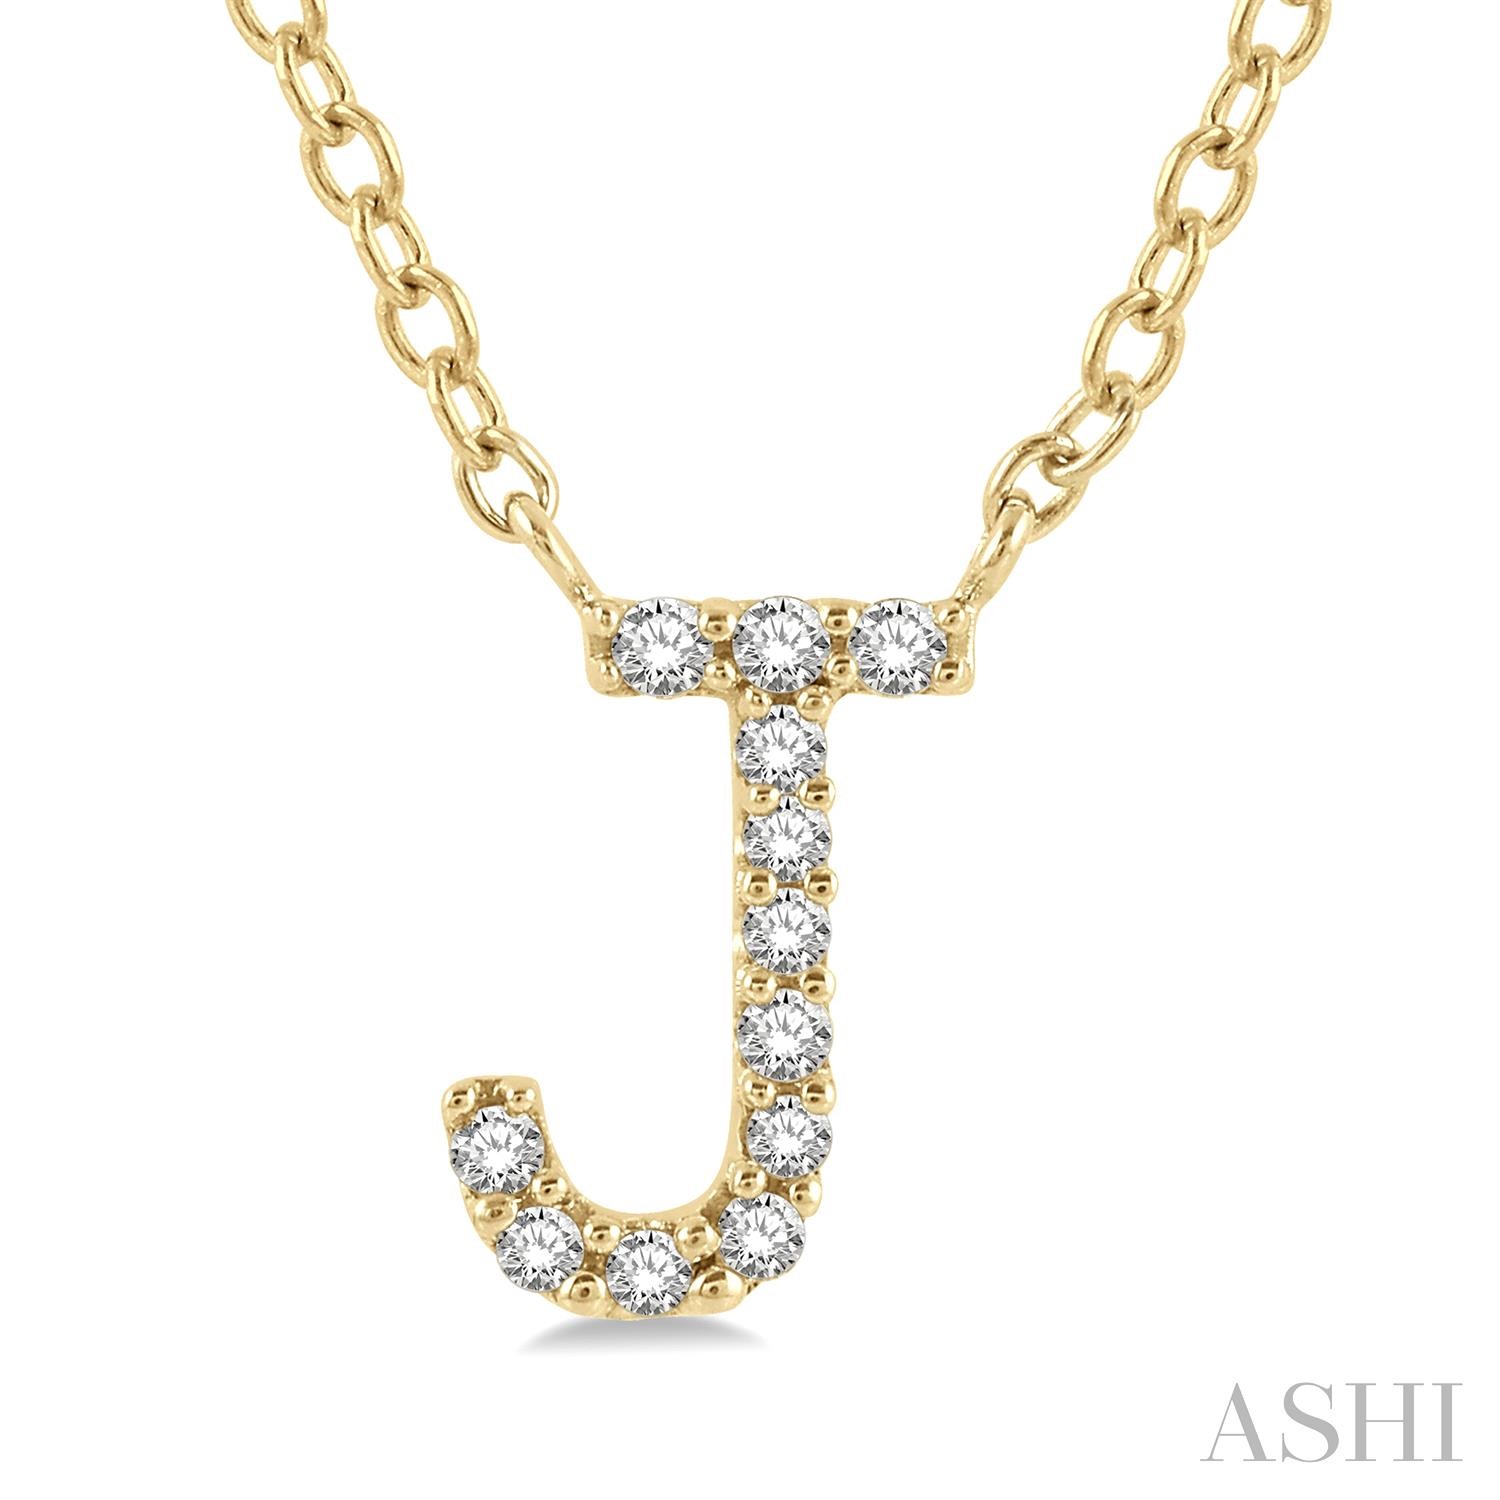 10 Karat Yellow Gold Pendant J' Initial Diamond 0.05CTW Pendant Necklace
18 Inch Chain